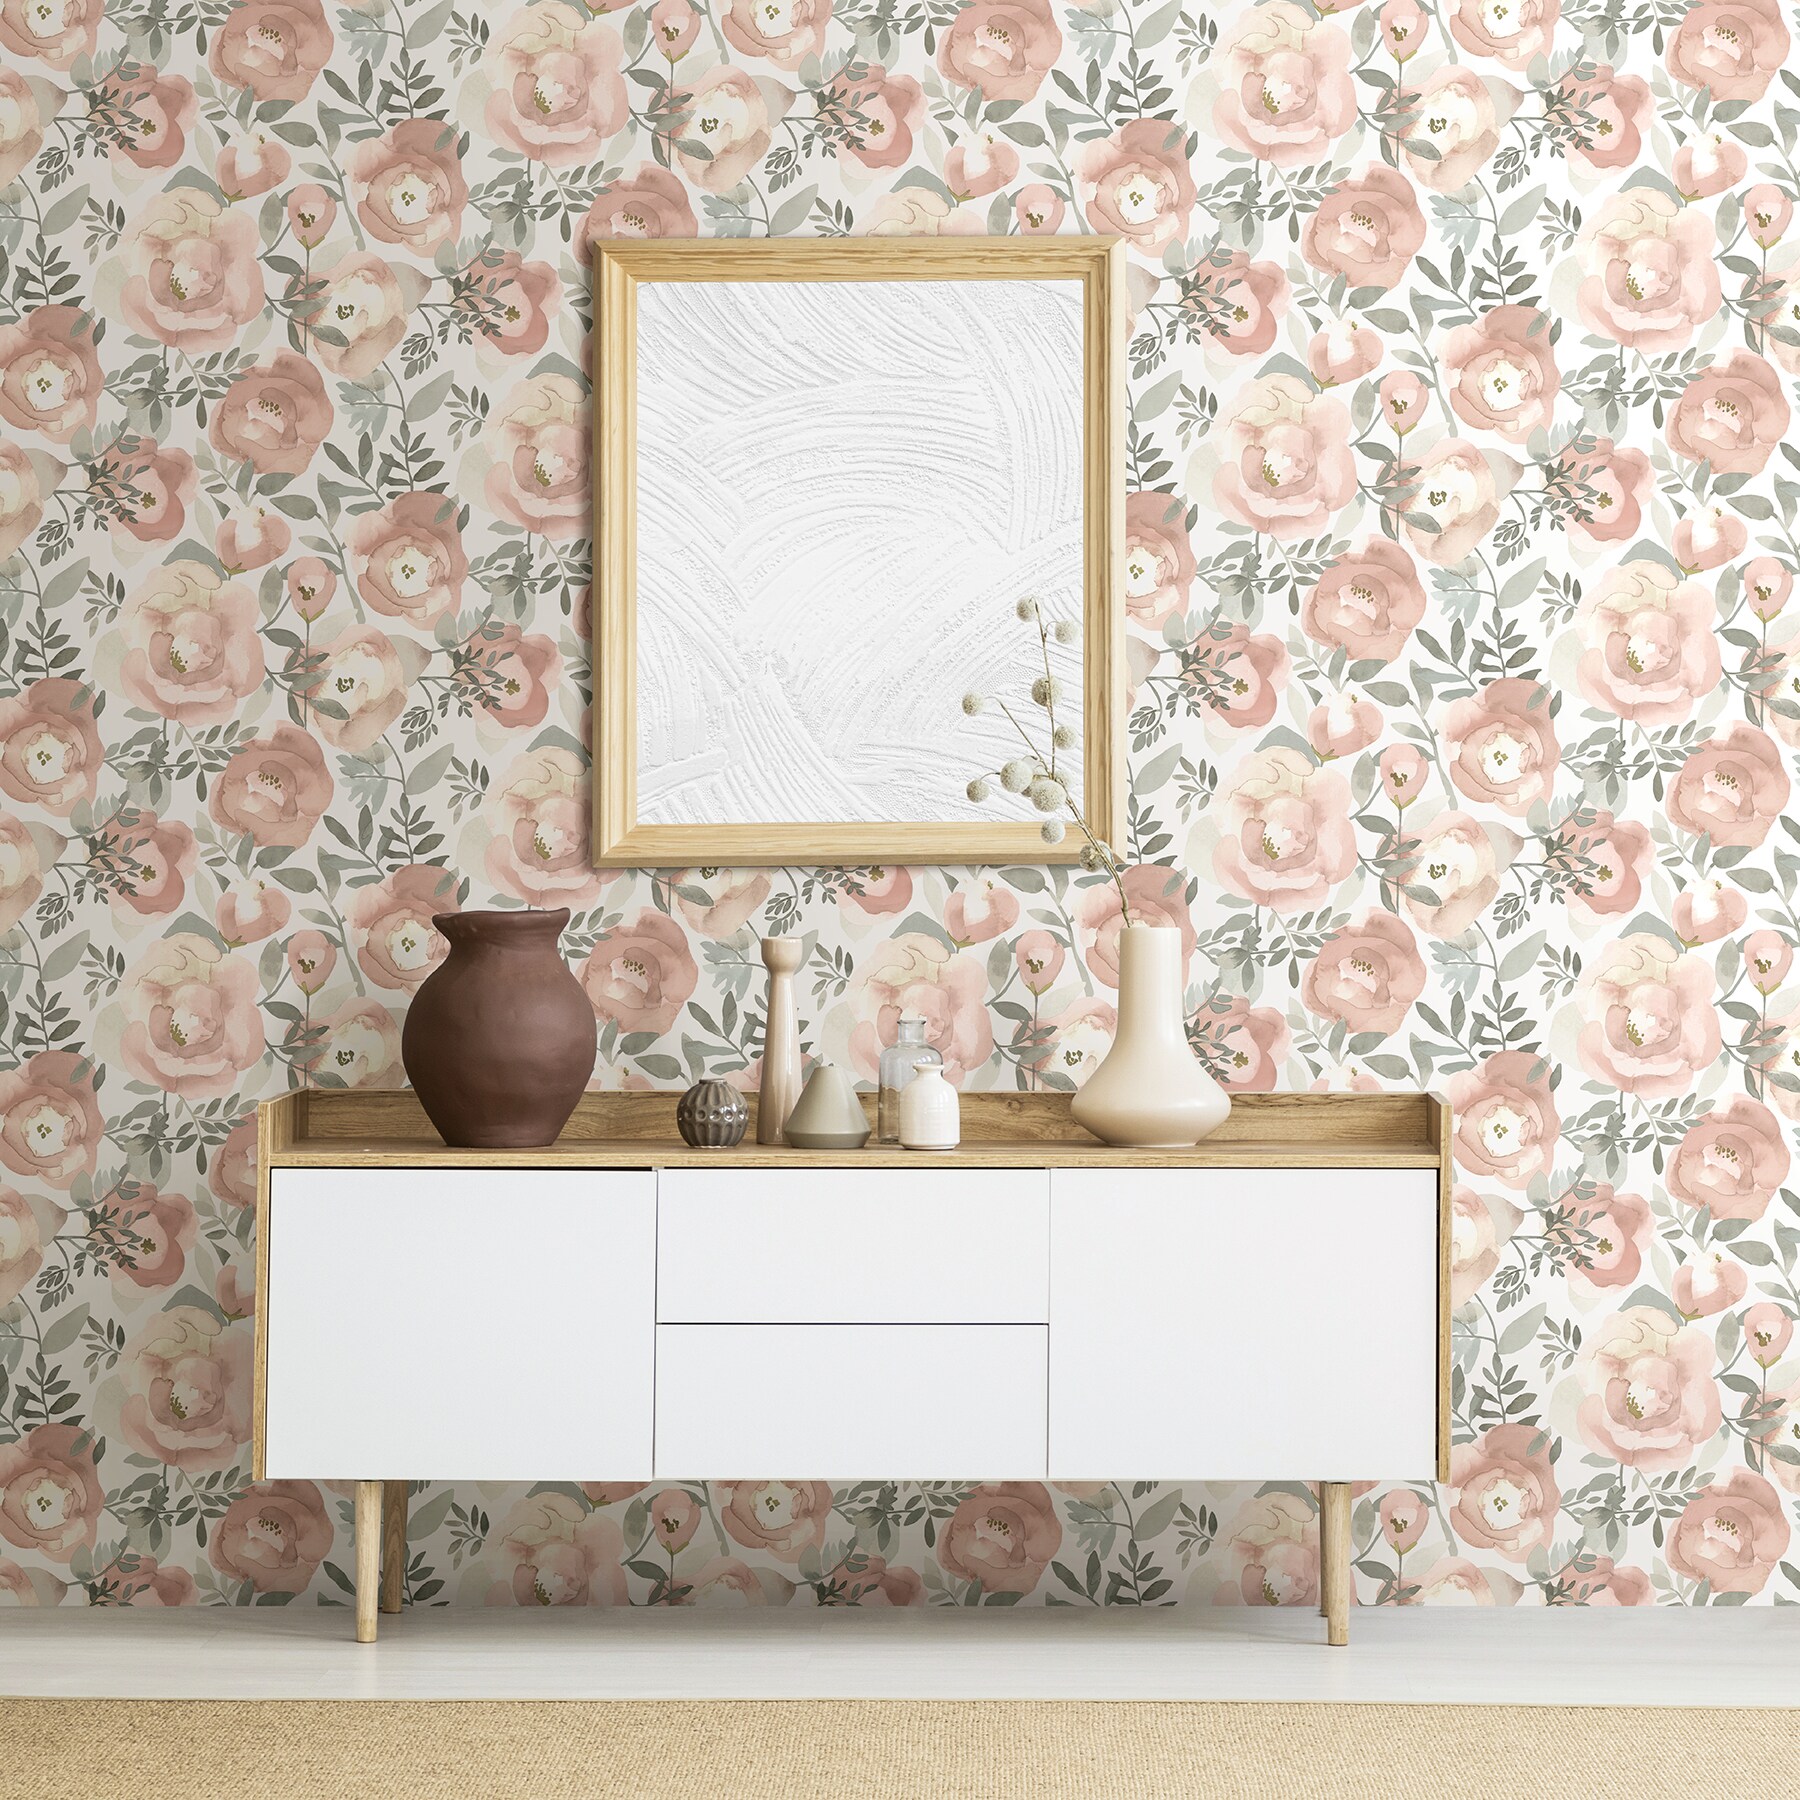 Rva Pink Fabric, Wallpaper and Home Decor